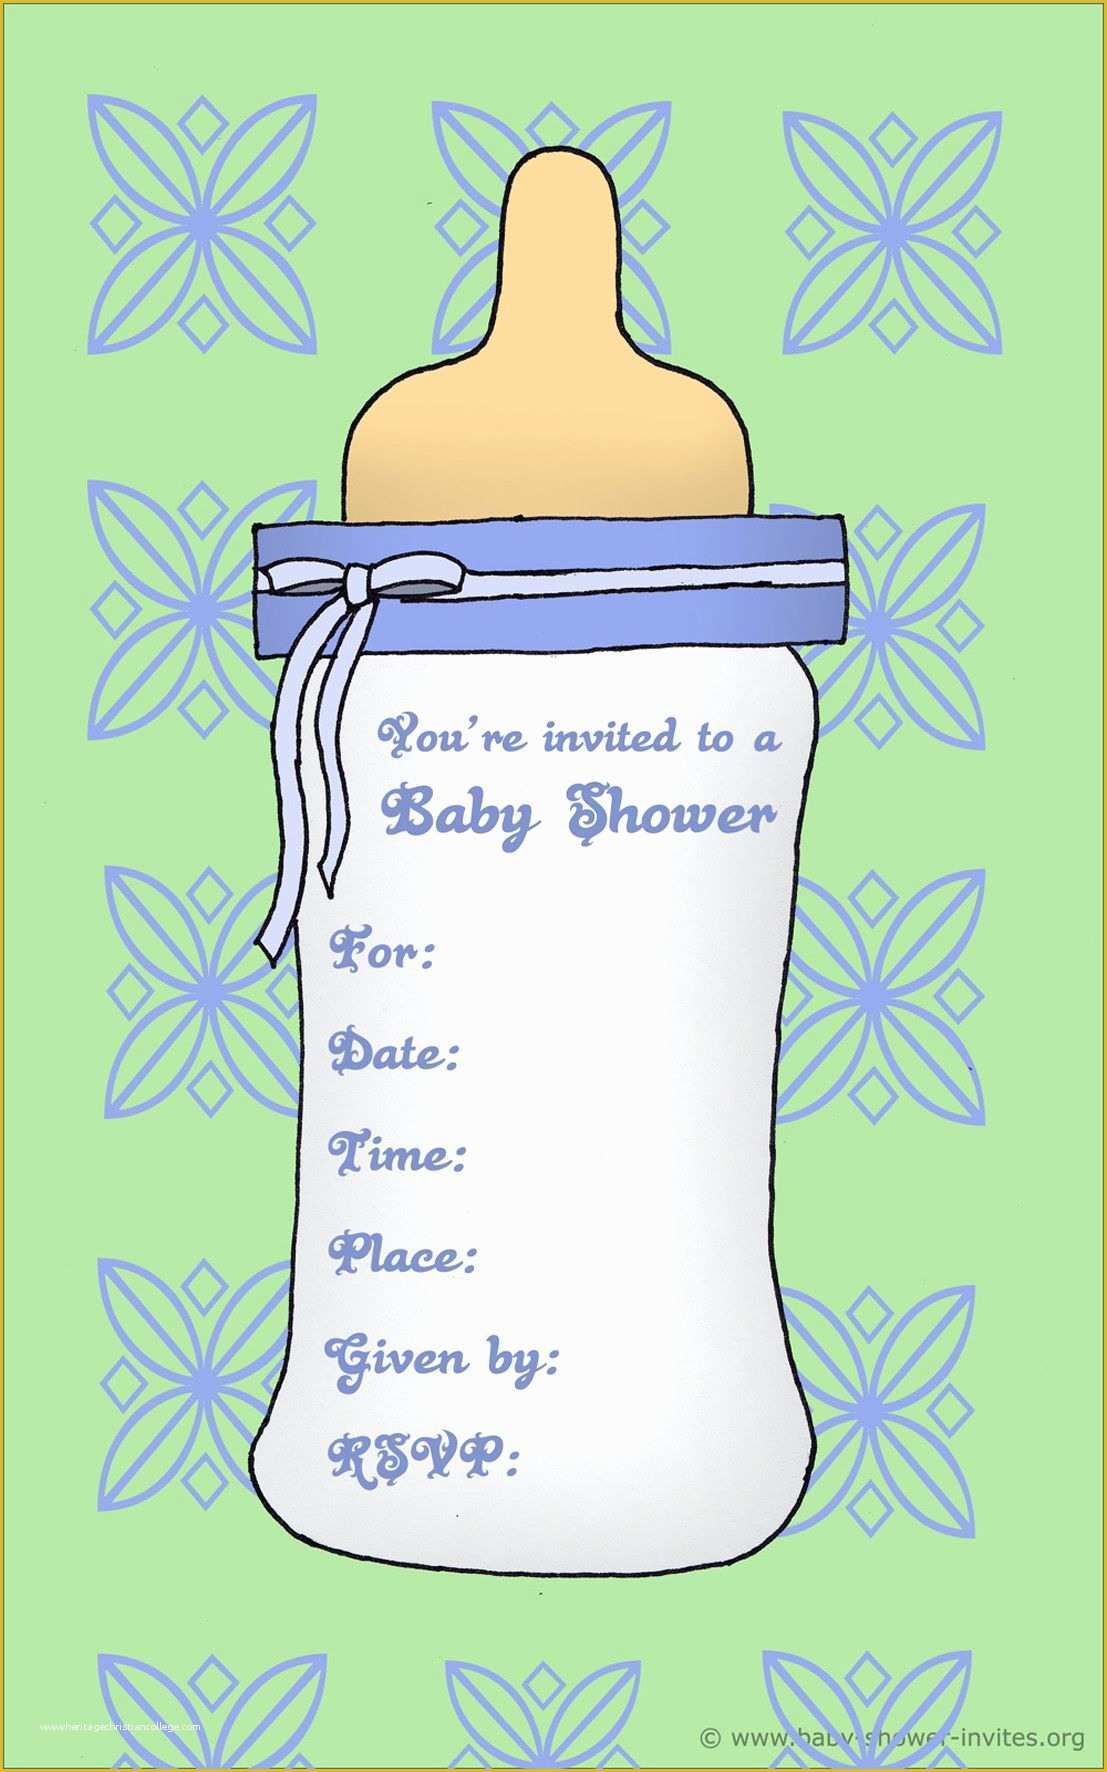 Free Baby Invitation Templates Of Free Baby Invitation Template Free Baby Shower